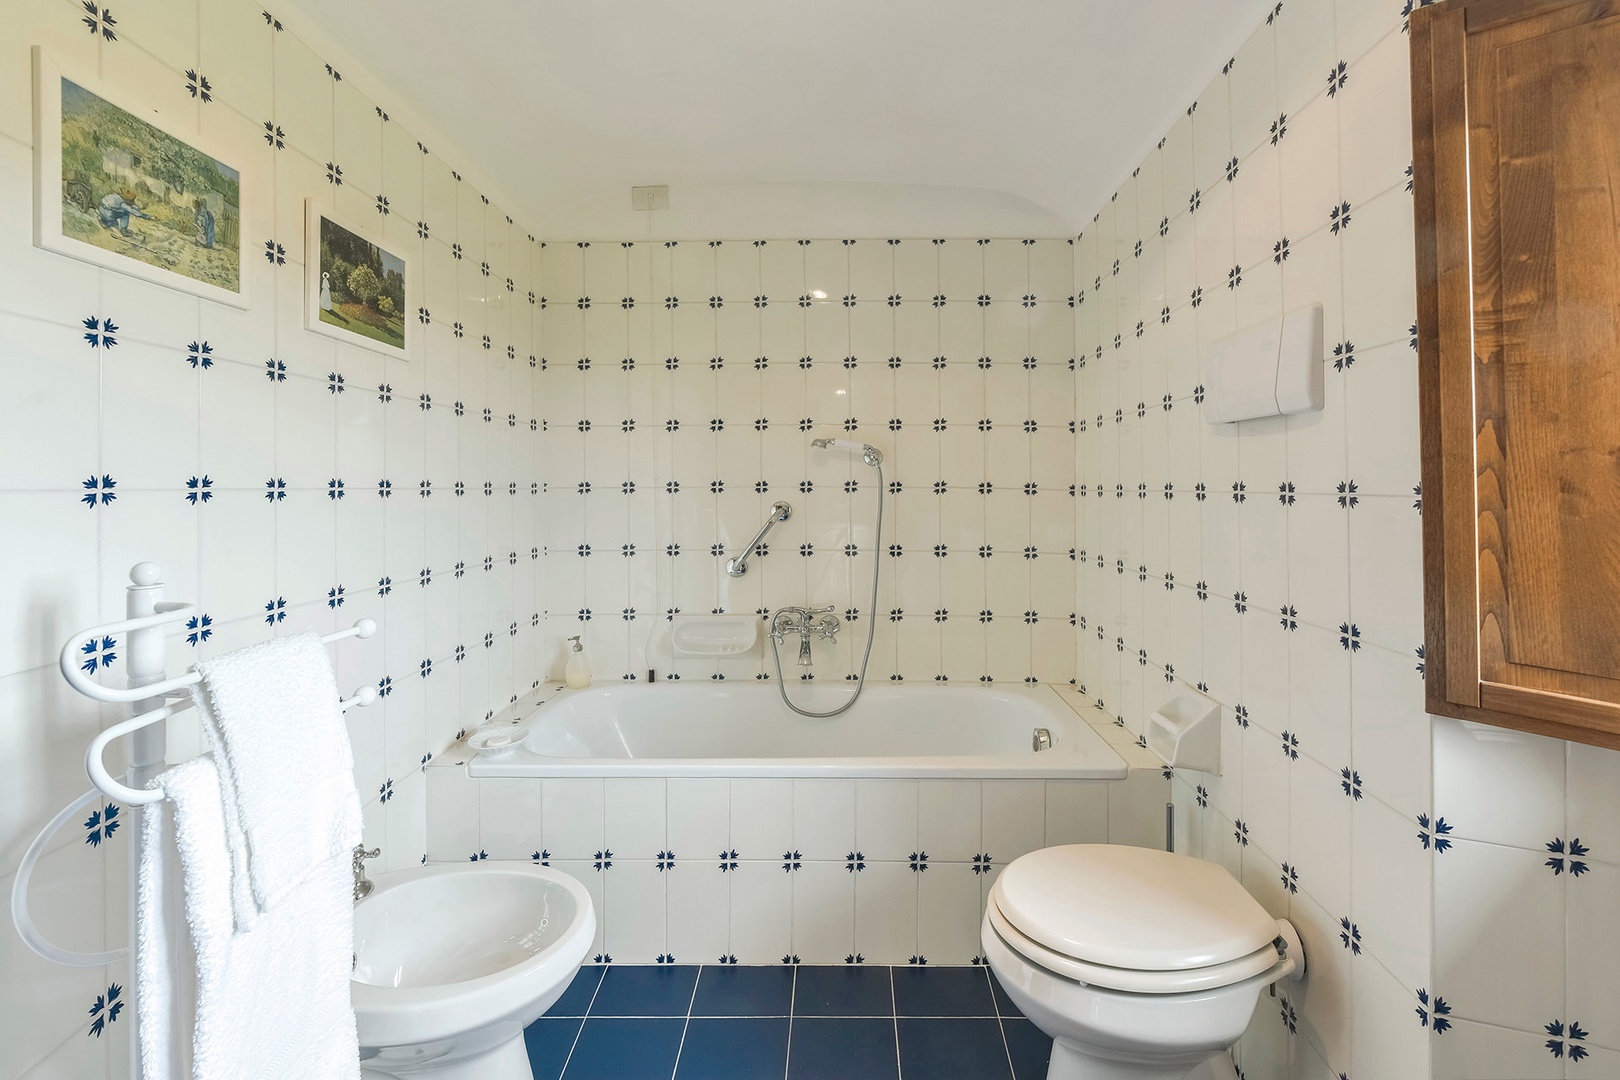 Bathroom 3 has a tub with handheld showerhead.